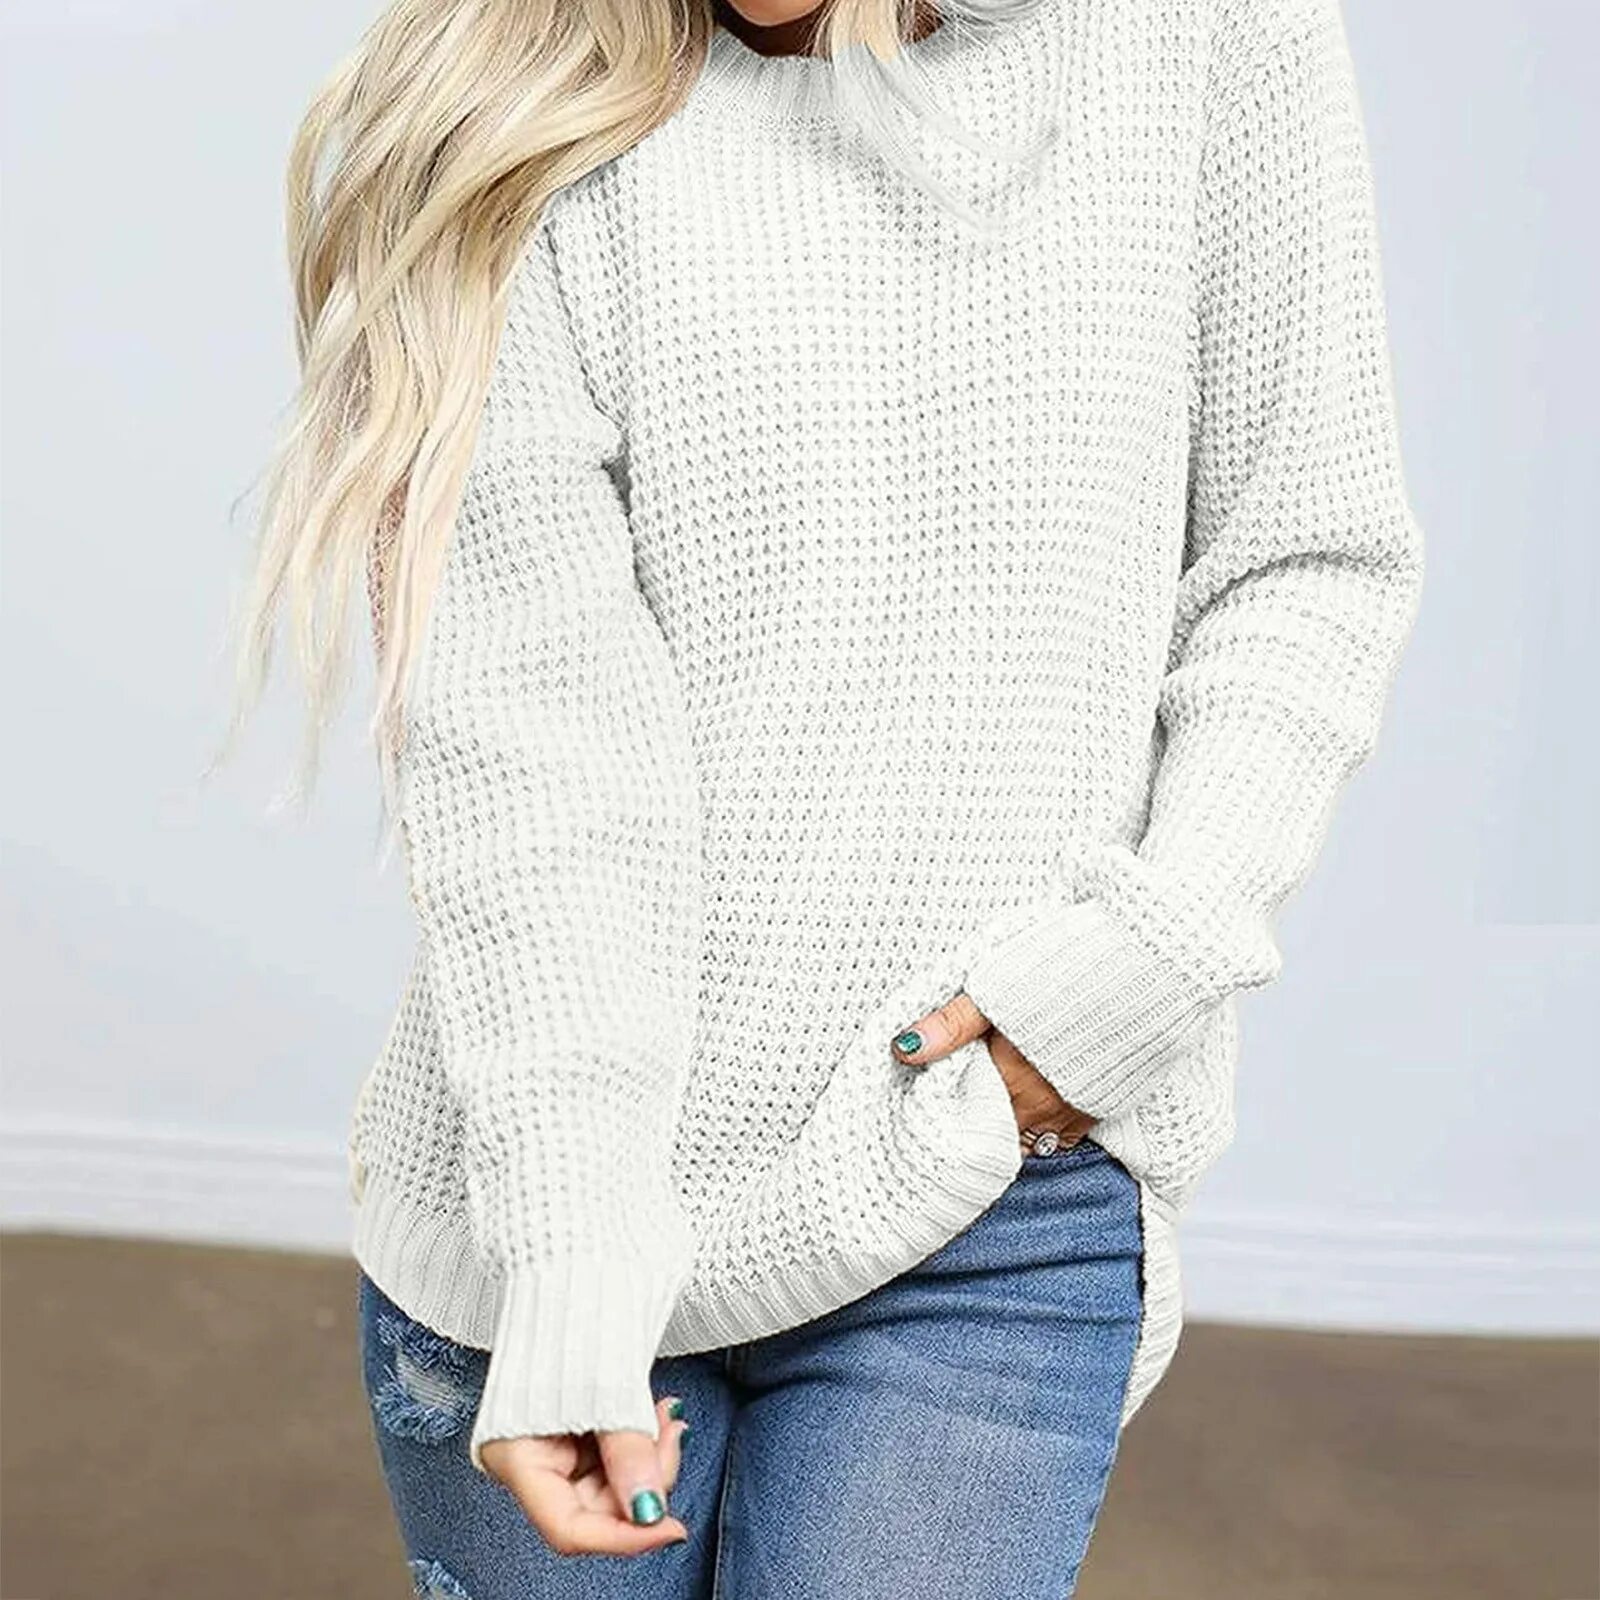 Джемпер оверсайз. Свитер черно белый оверсайз. Женский свитер оверсайз плетеный. Пуловер оверсайз для девушки спицами яркий и нарядный. Женский свитер оверсайз с рукавом код 6611 производитель Турция.